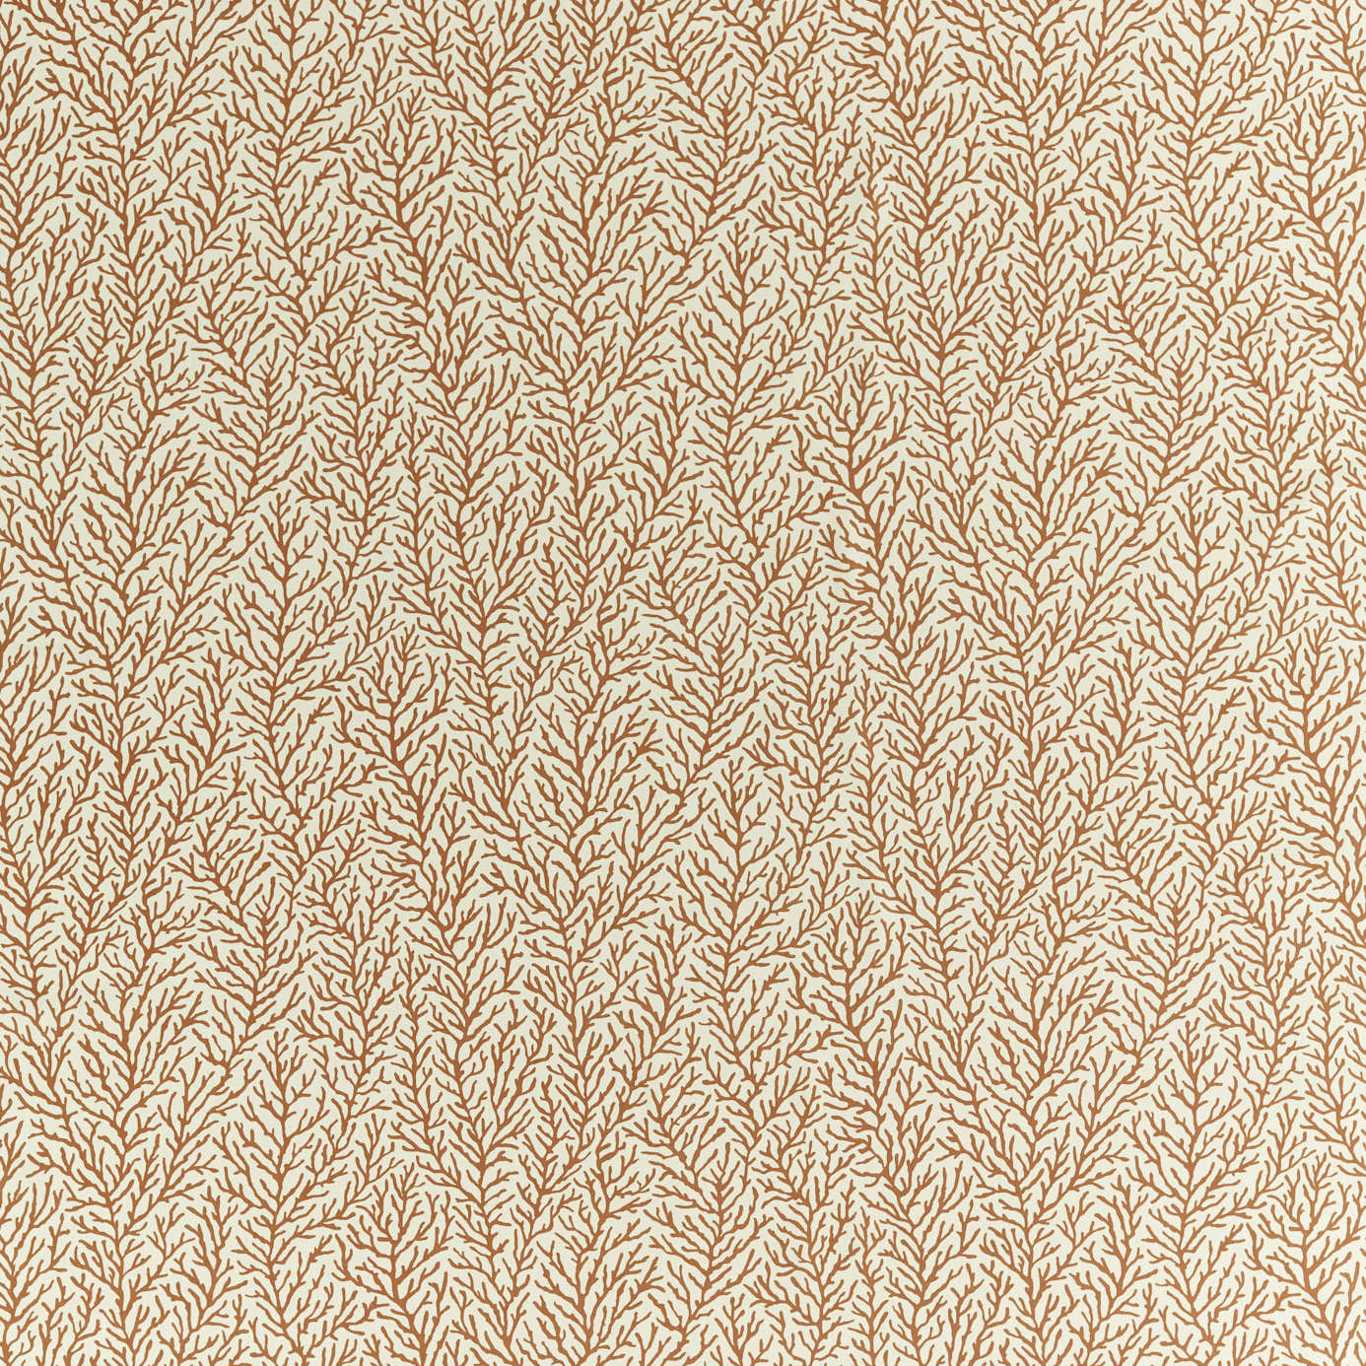 Atoll Bronze/Sailcloth Fabric by HAR